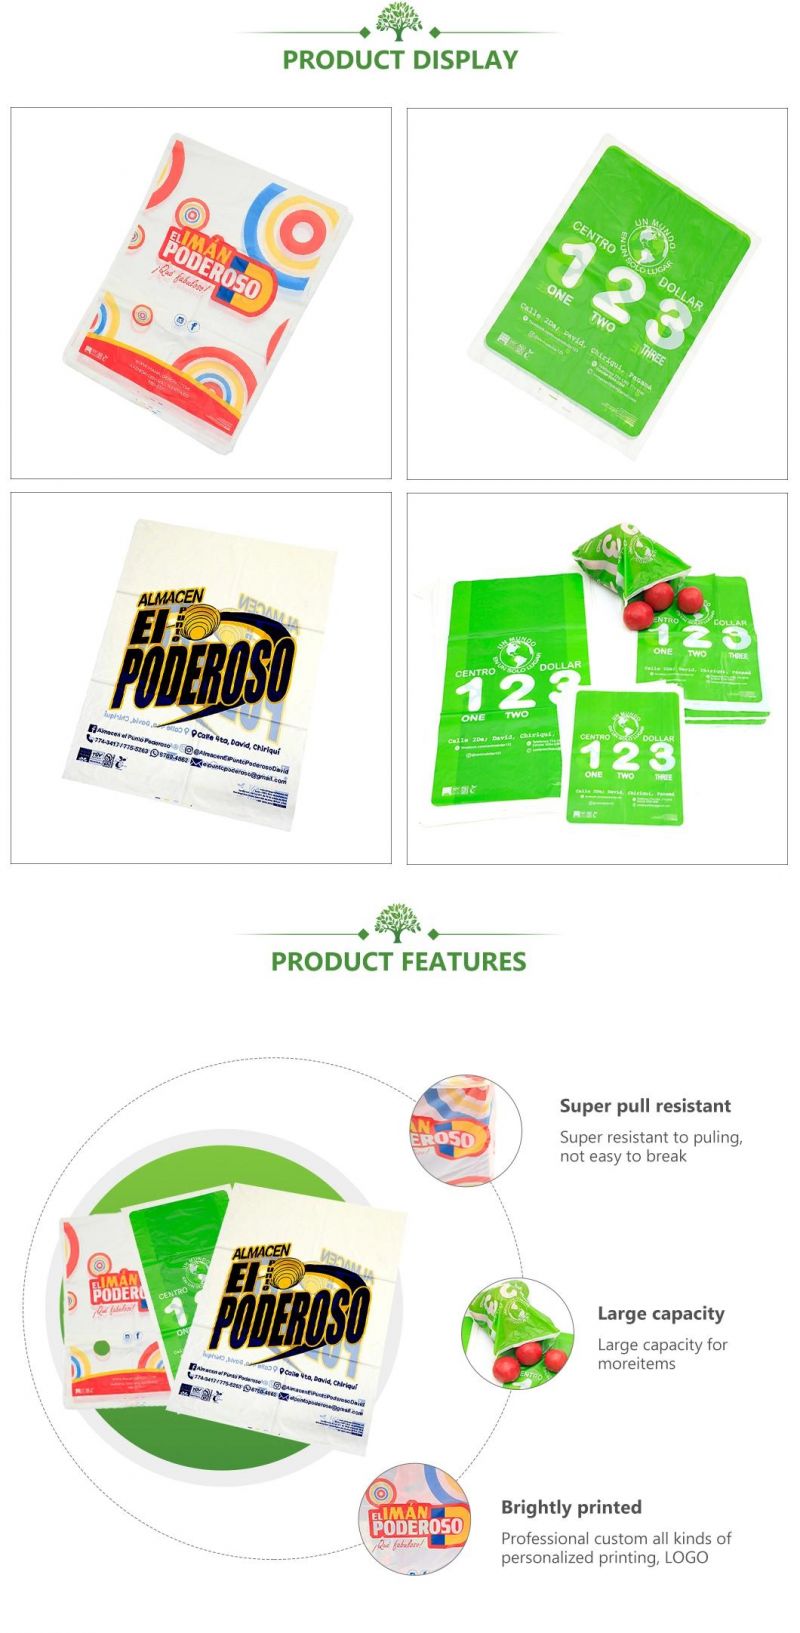 PLA+Pbat/Pbat+Corn Starch Biodegradable Bags, Compostable Bags, Flat Bags for Hospital